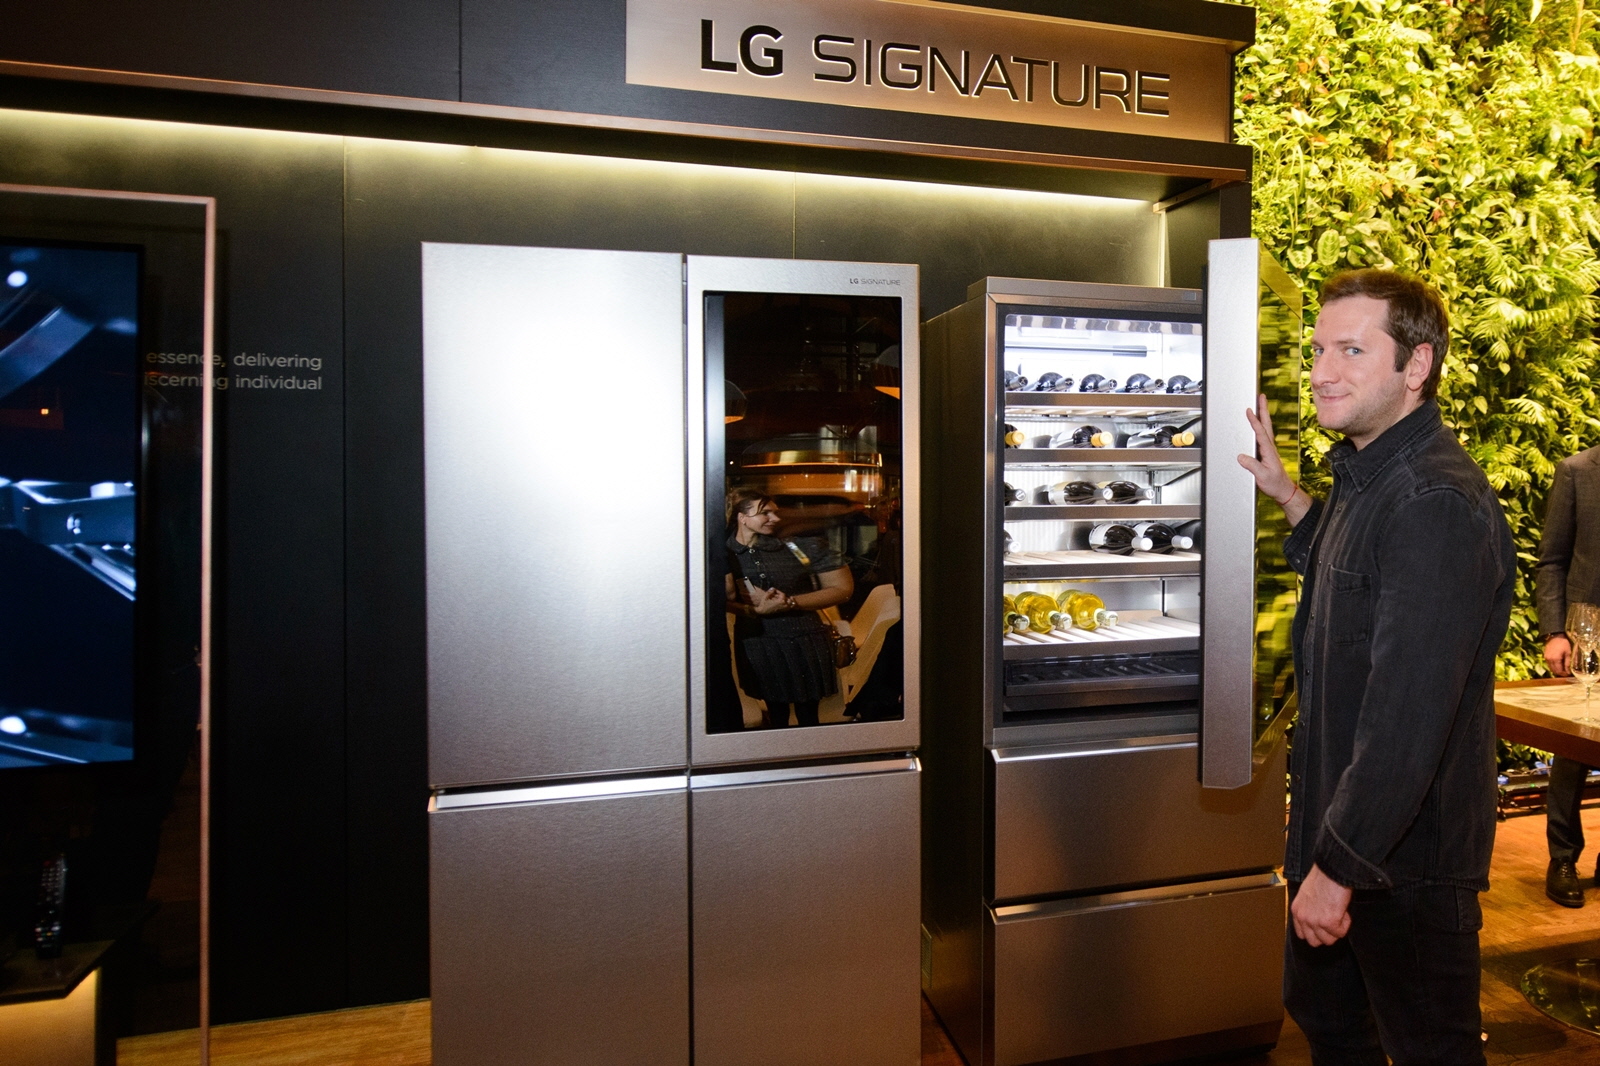 : LG전자가 19일 러시아 모스크바 포시즌스 호텔(Four Seasons Hotel Moscow)에서 고객들에게 超프리미엄 ‘LG 시그니처(LG SIGNATURE)’의 차별화된 가치를 알리기 위한 자리를 마련했다. 고객들이 LG 시그니처를 체험하고 있다. 